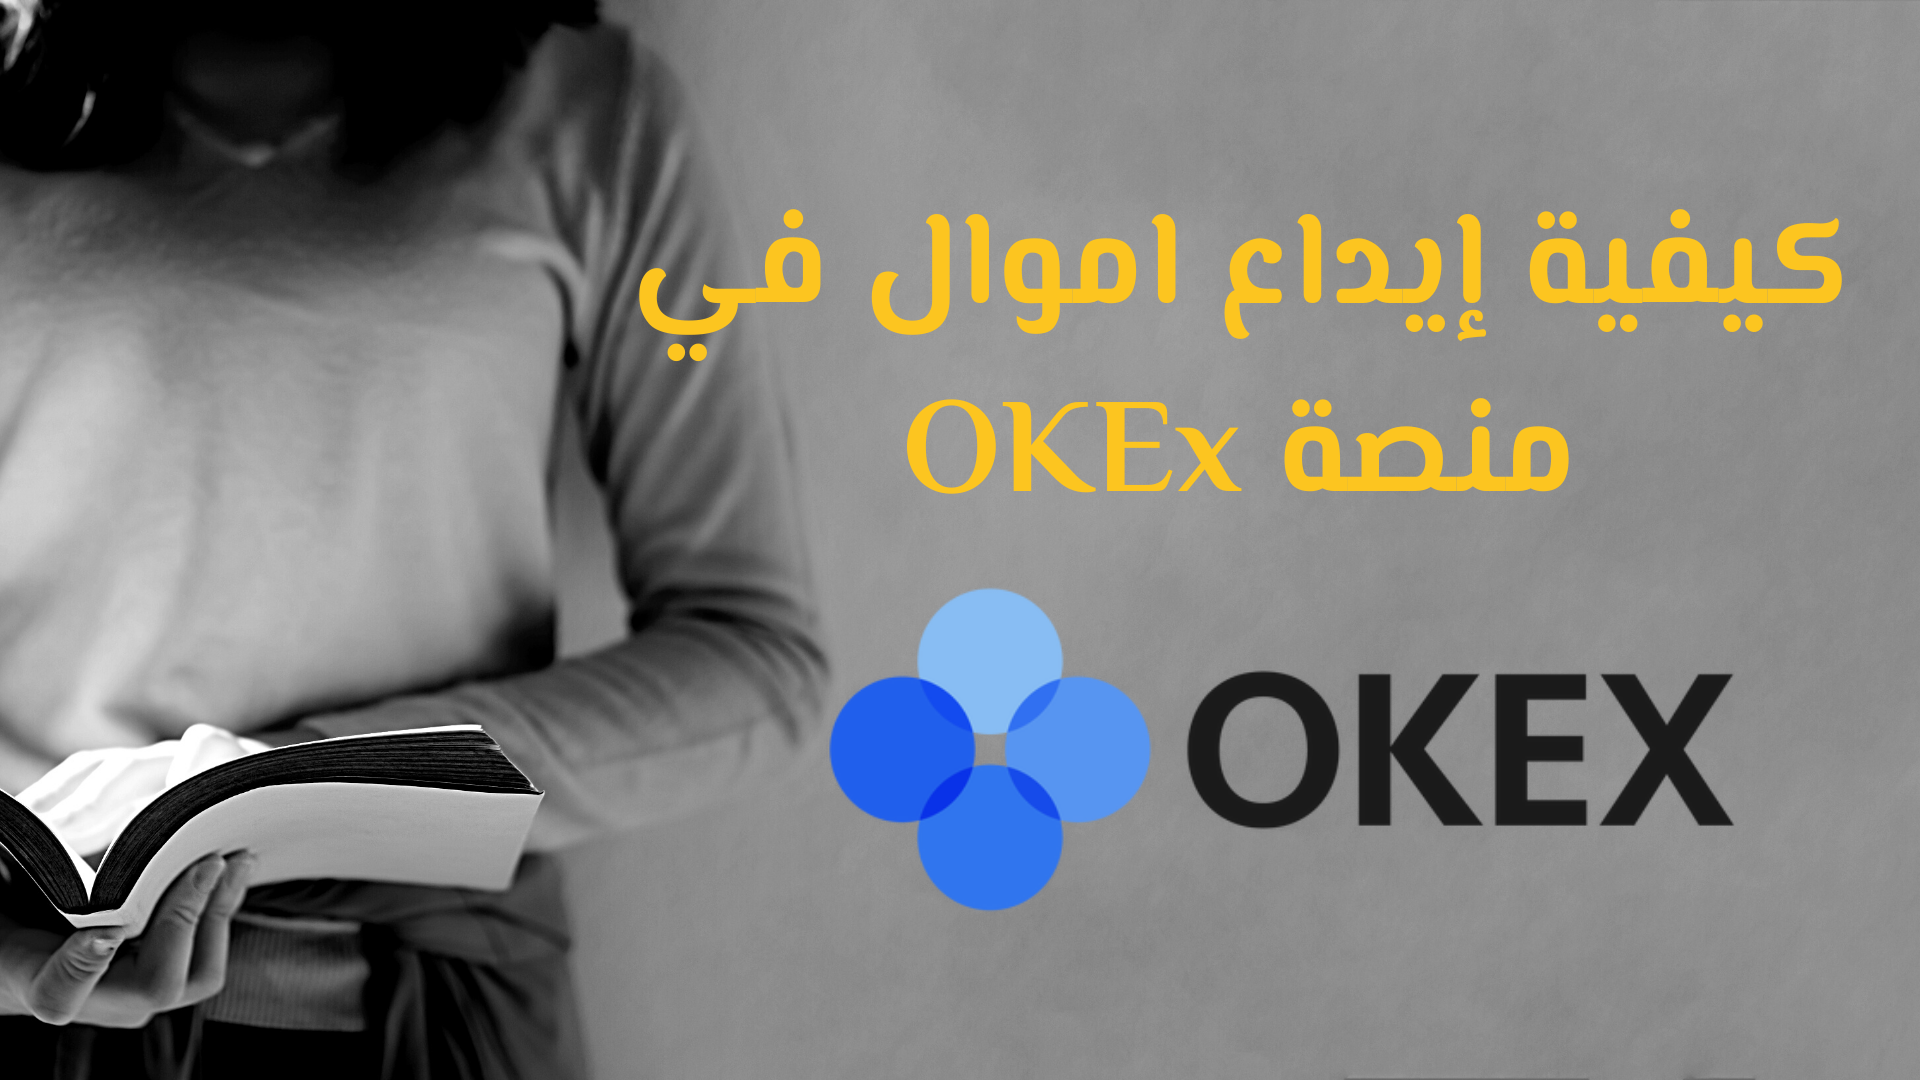 OKEX 6